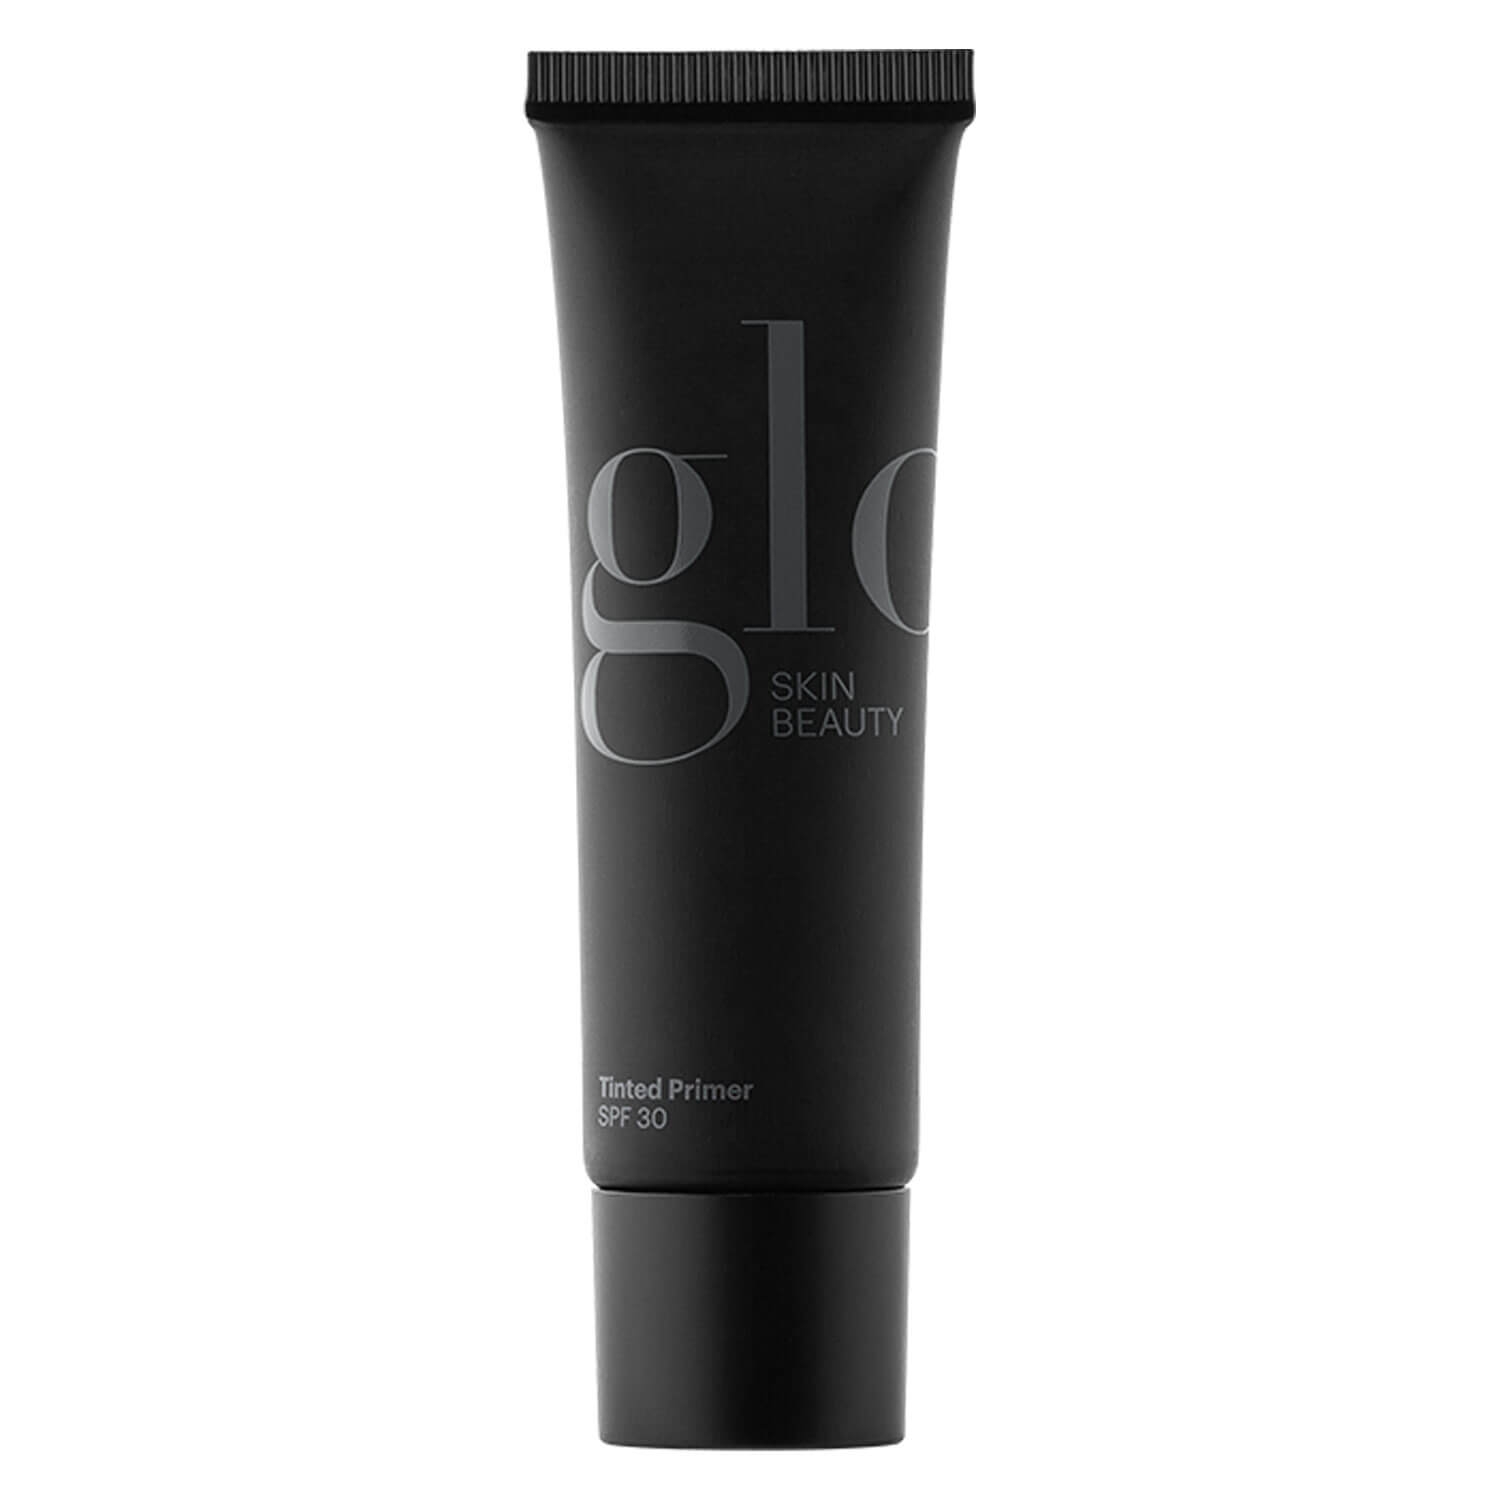 Produktbild von Glo Skin Beauty Primer - Tinted Primer Light SPF 30